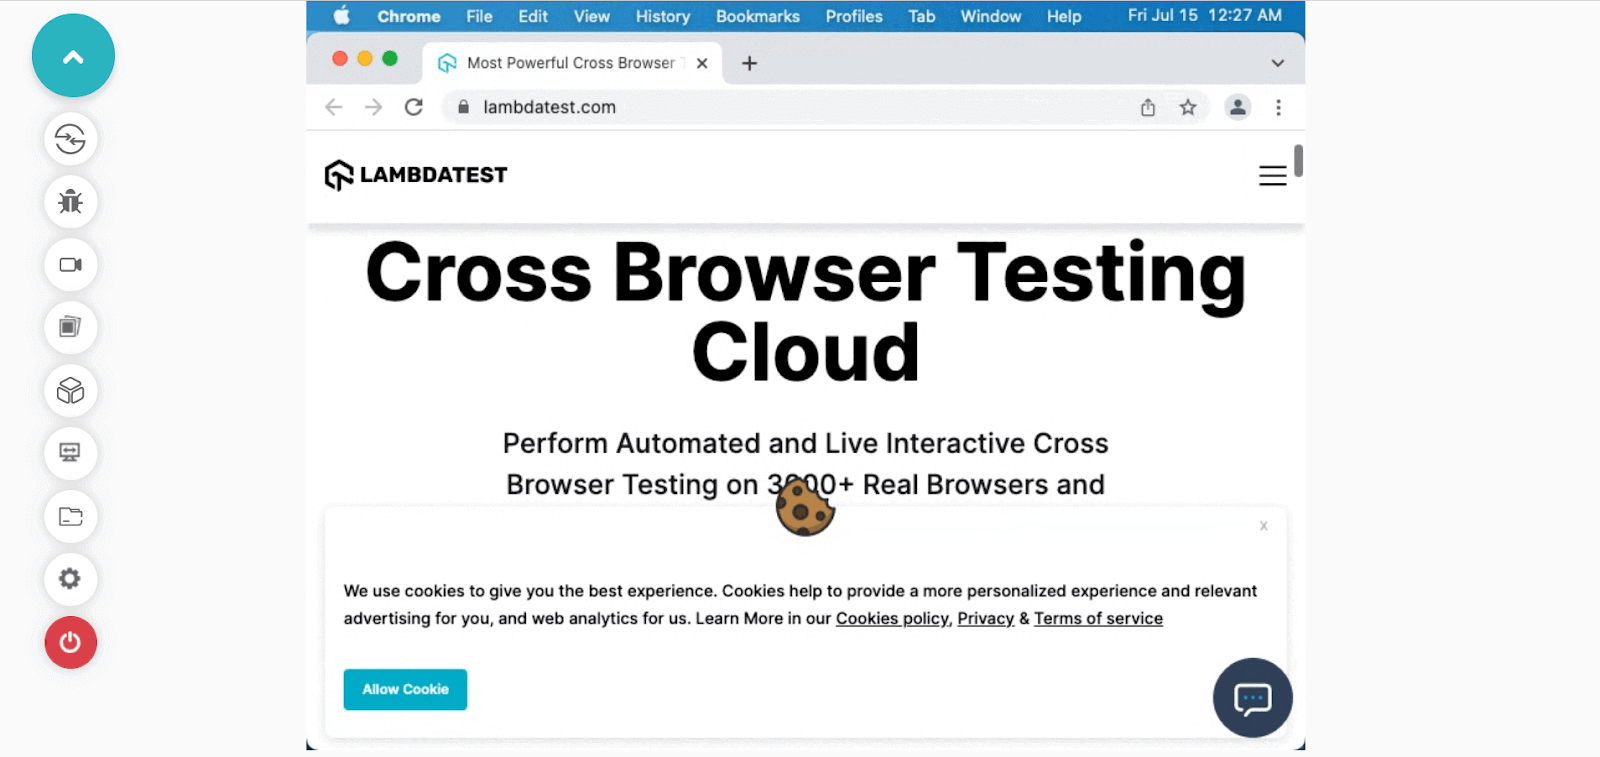 Cross browser testing cloud